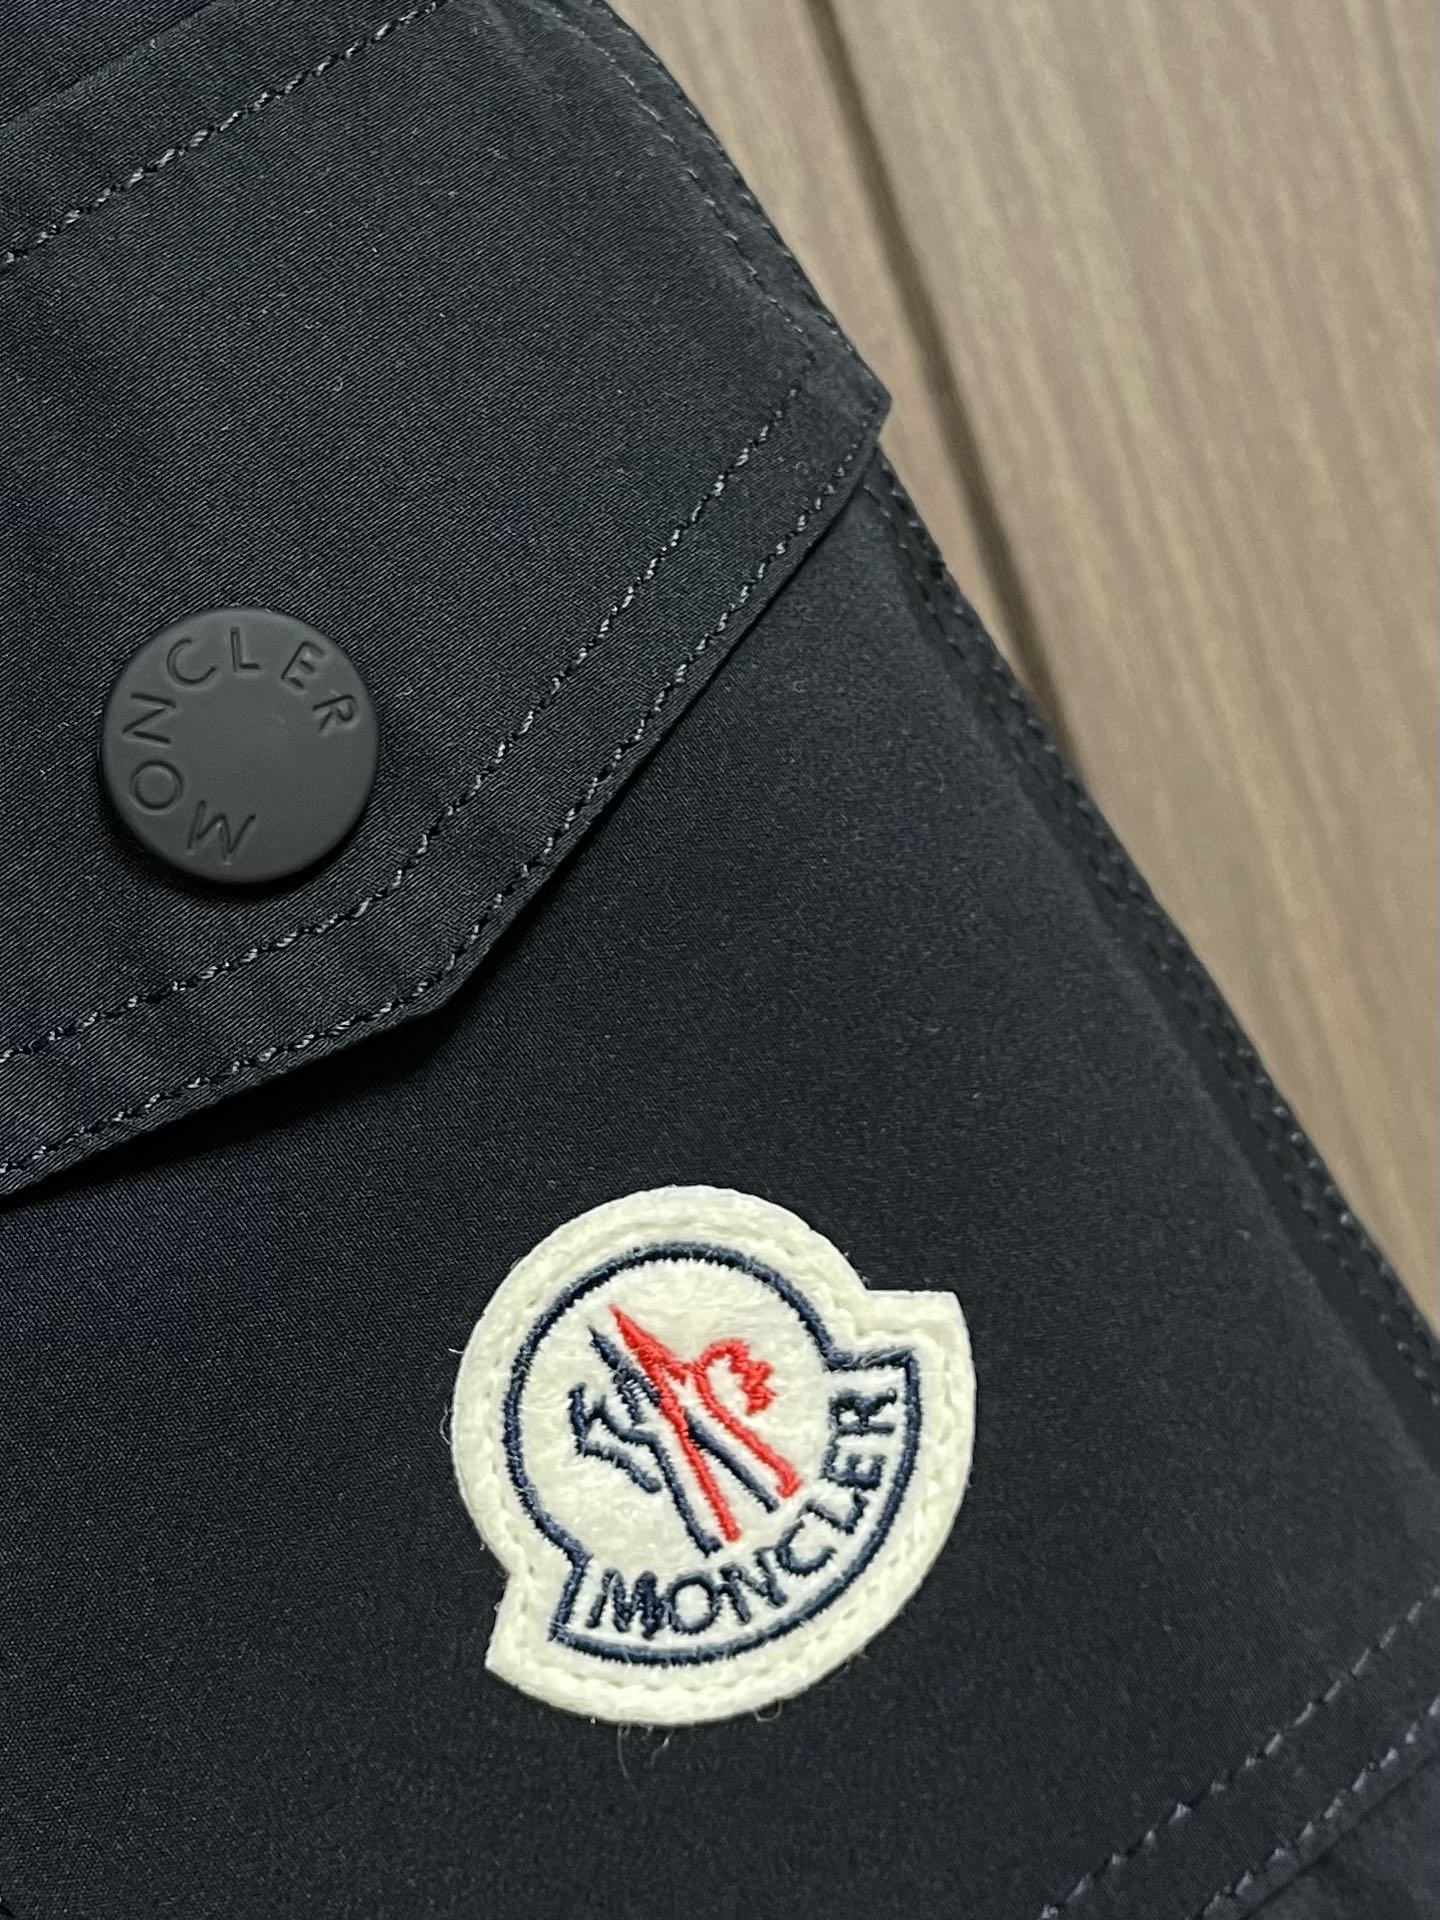 Moncler风衣夹克外套防风防水冲锋衣对于此品牌冲锋衣做为羽绒服的佼佼者本品无伦是做工细节还是面料都是